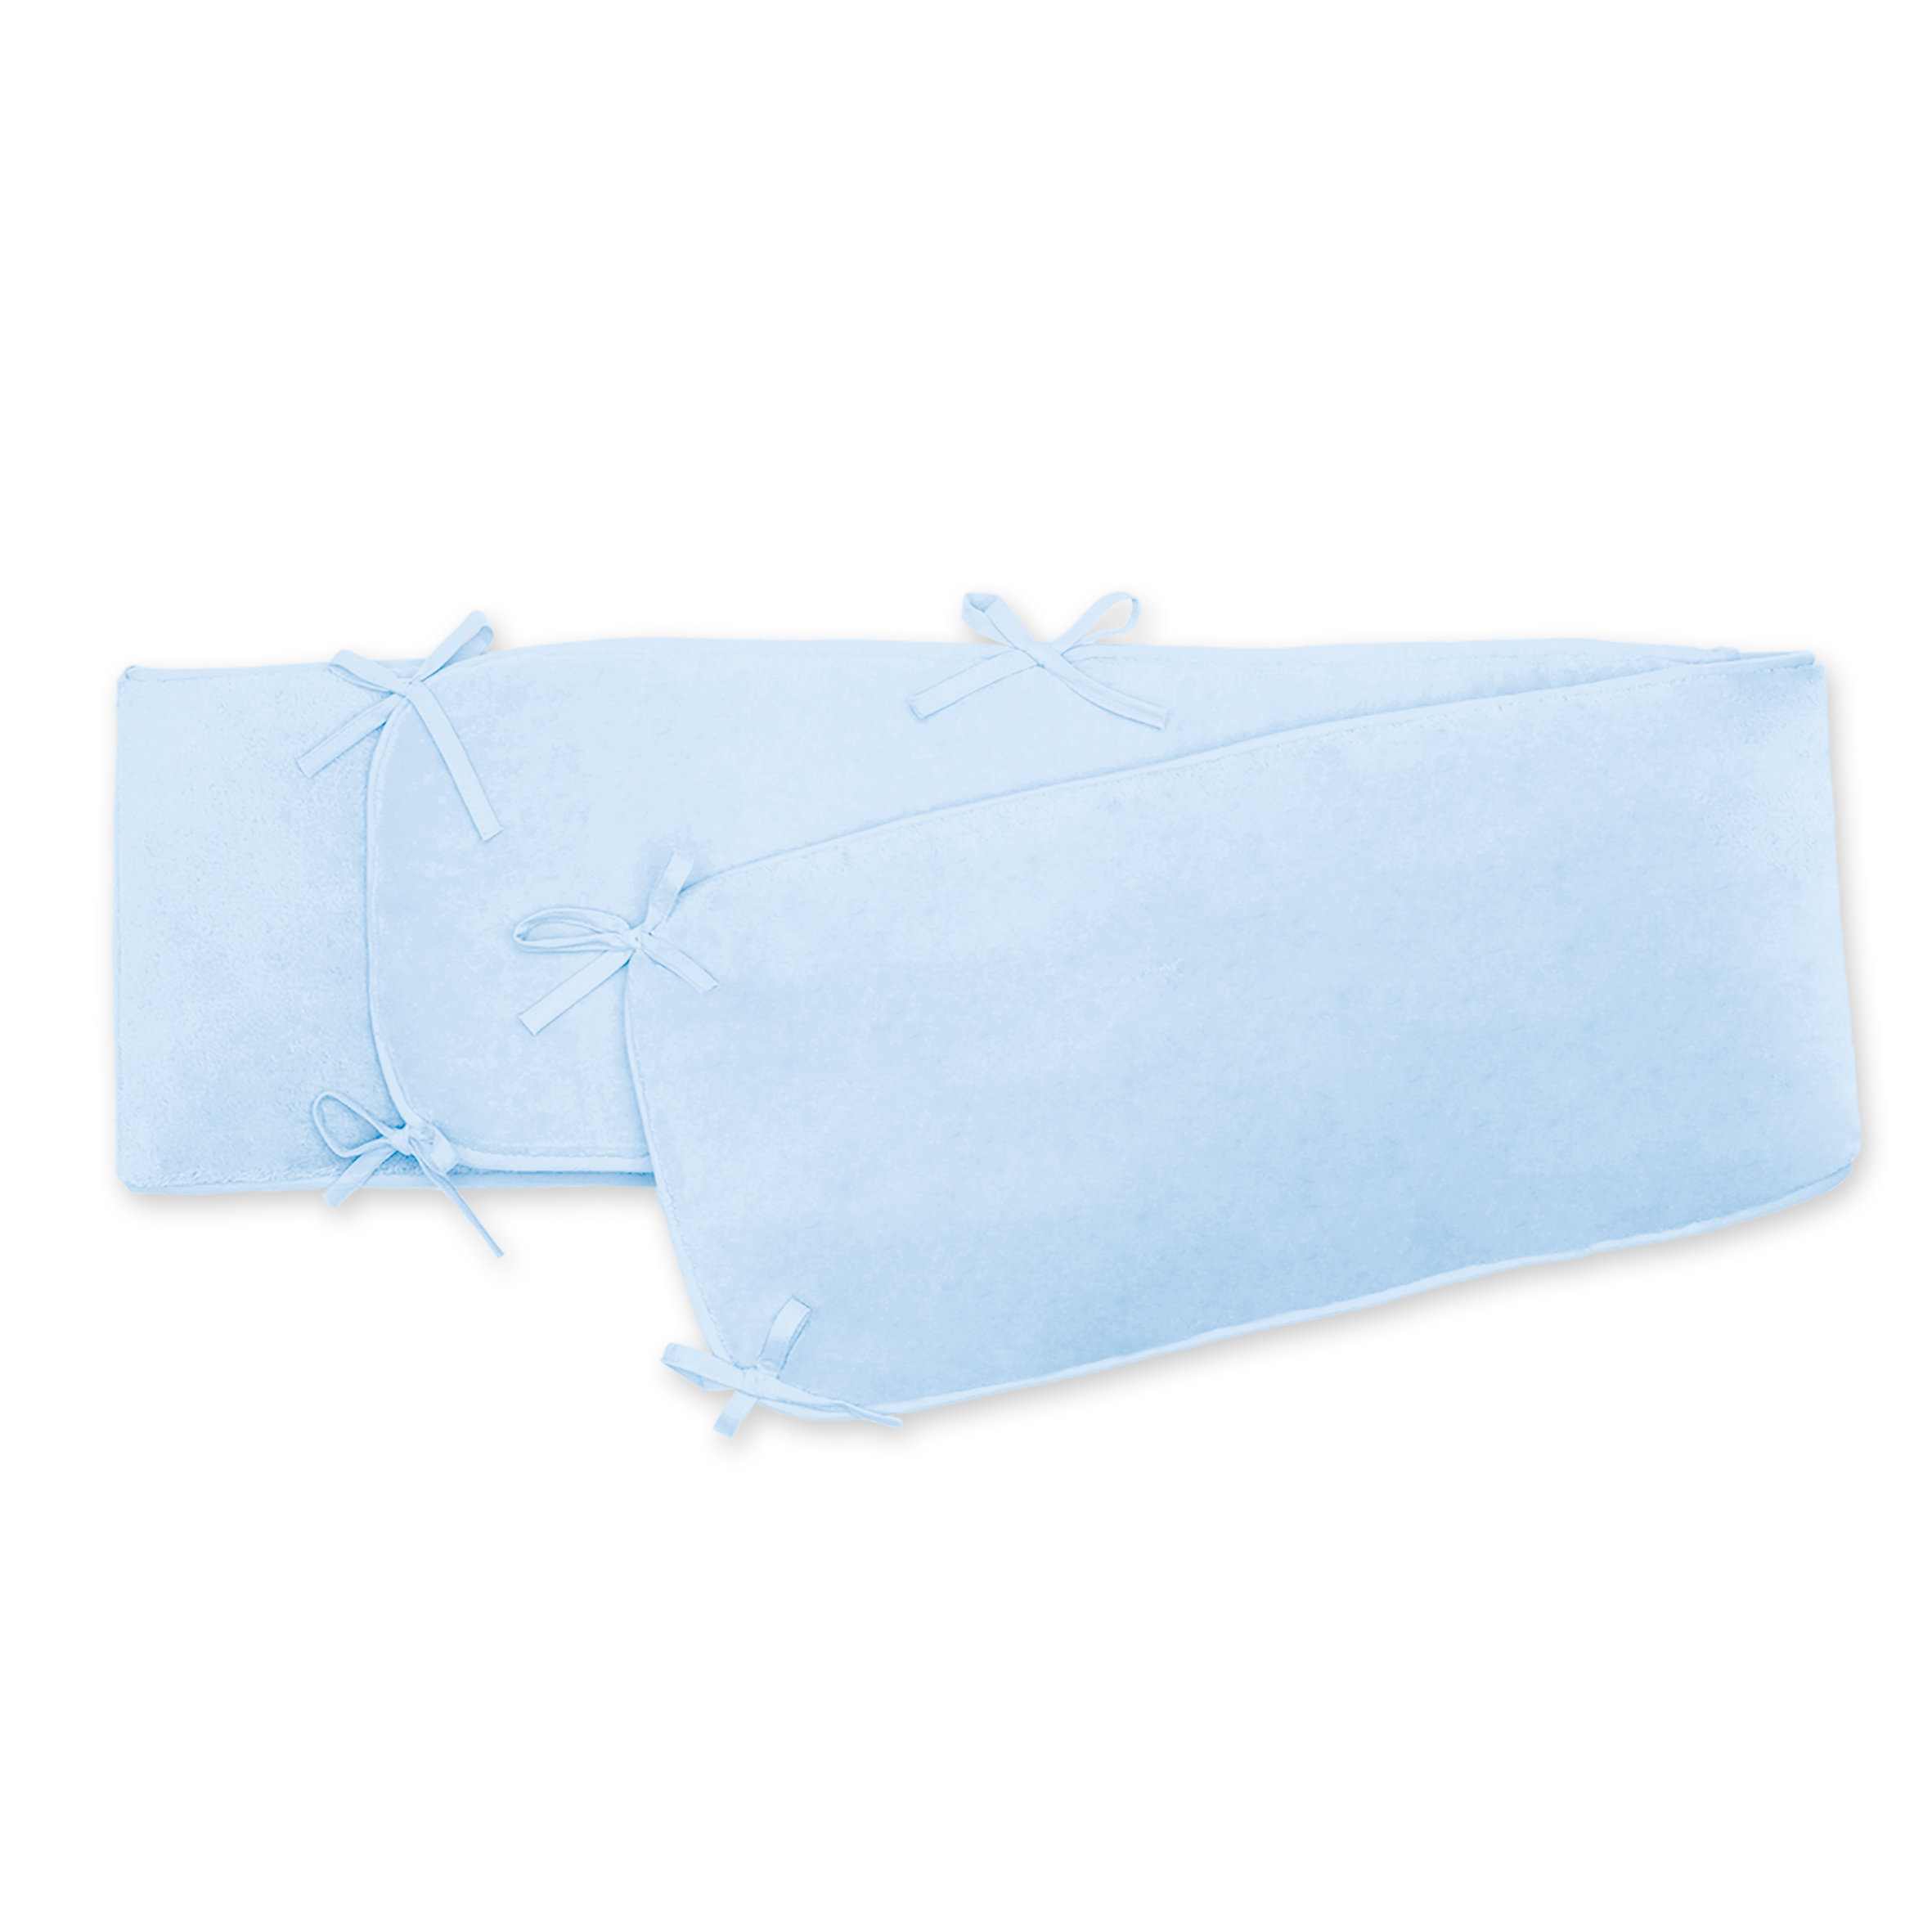 Nestchen Laufgitter Pady softy + terry 75x95x28cm  Helles blau